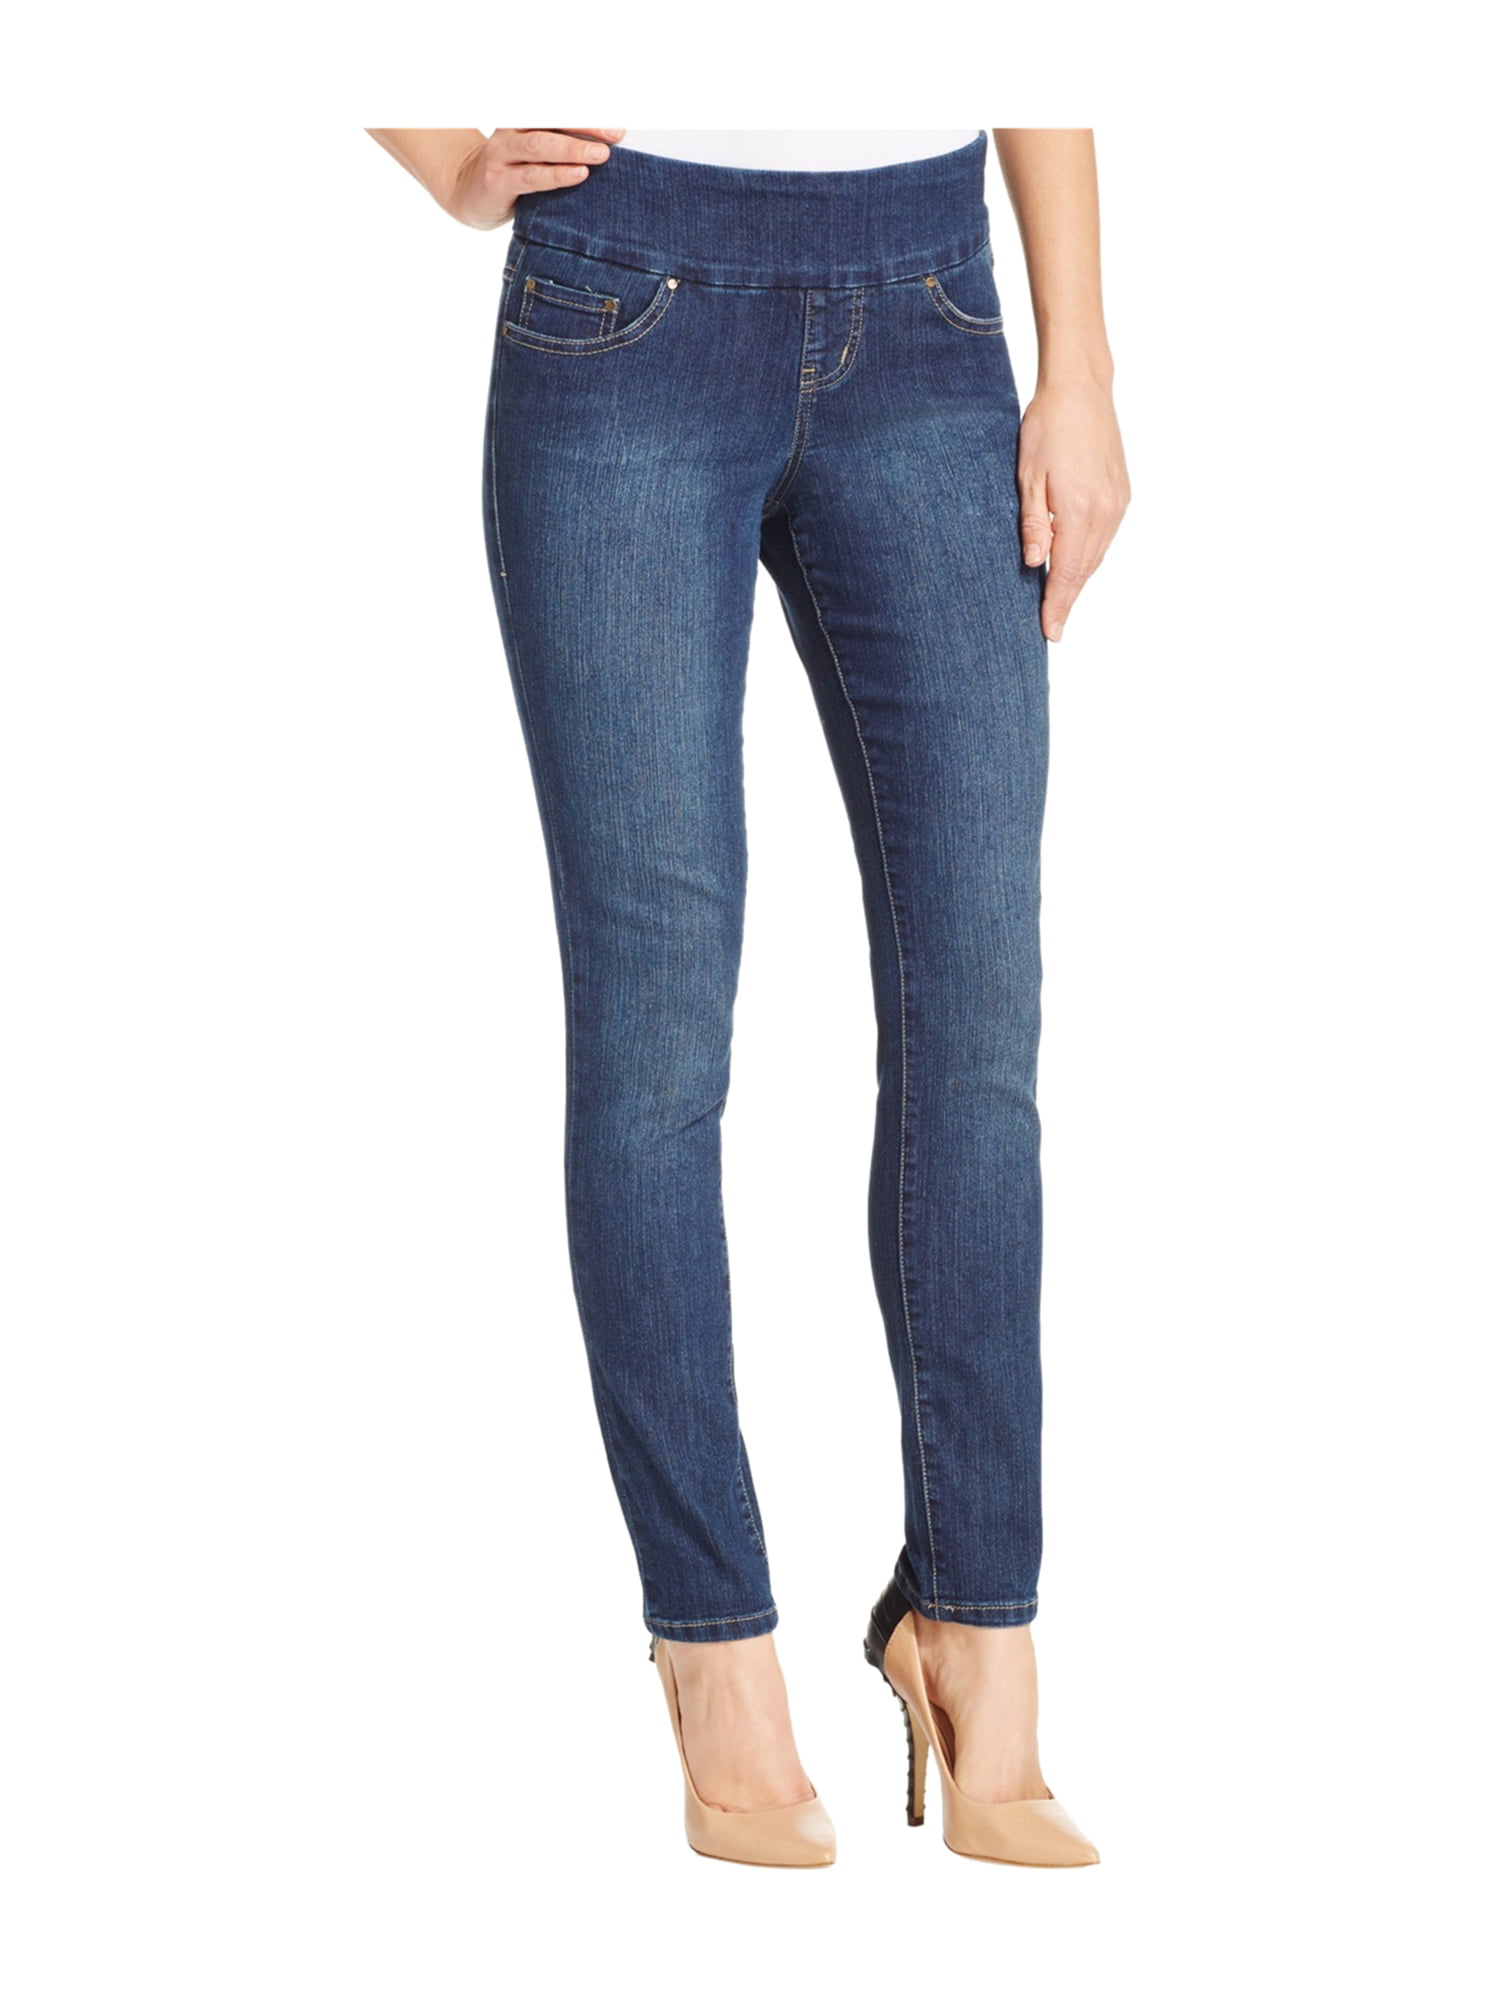 JAG Jeans - Jag Womens Nora Skinny Fit Jeans - Walmart.com - Walmart.com